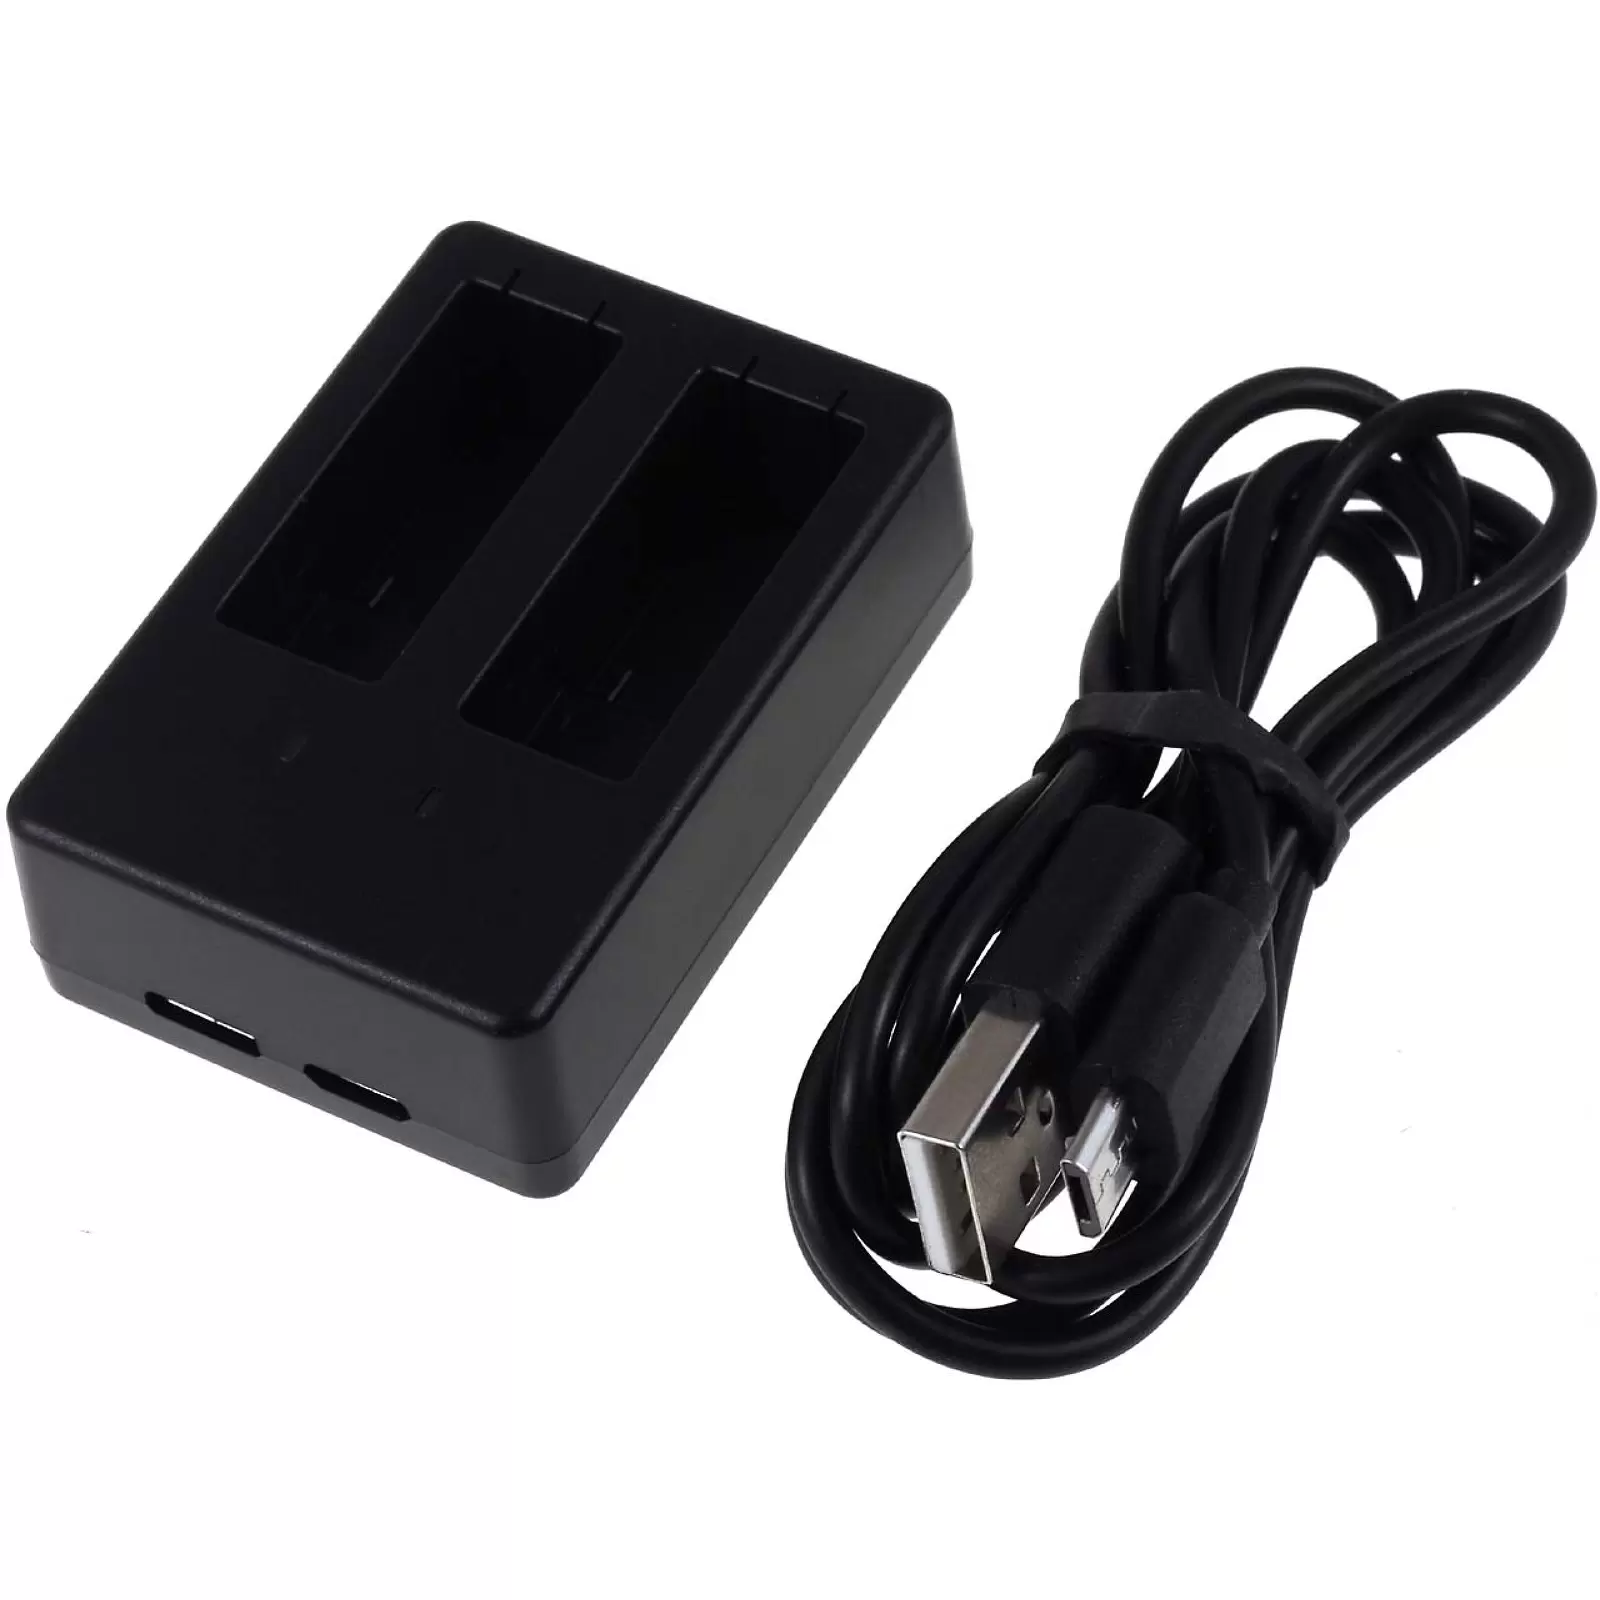 Ladegerät für 2 Stück GoPro Hero 5 Akkus / Ladertyp AHDBT-501 inkl. Micro USB Kabel